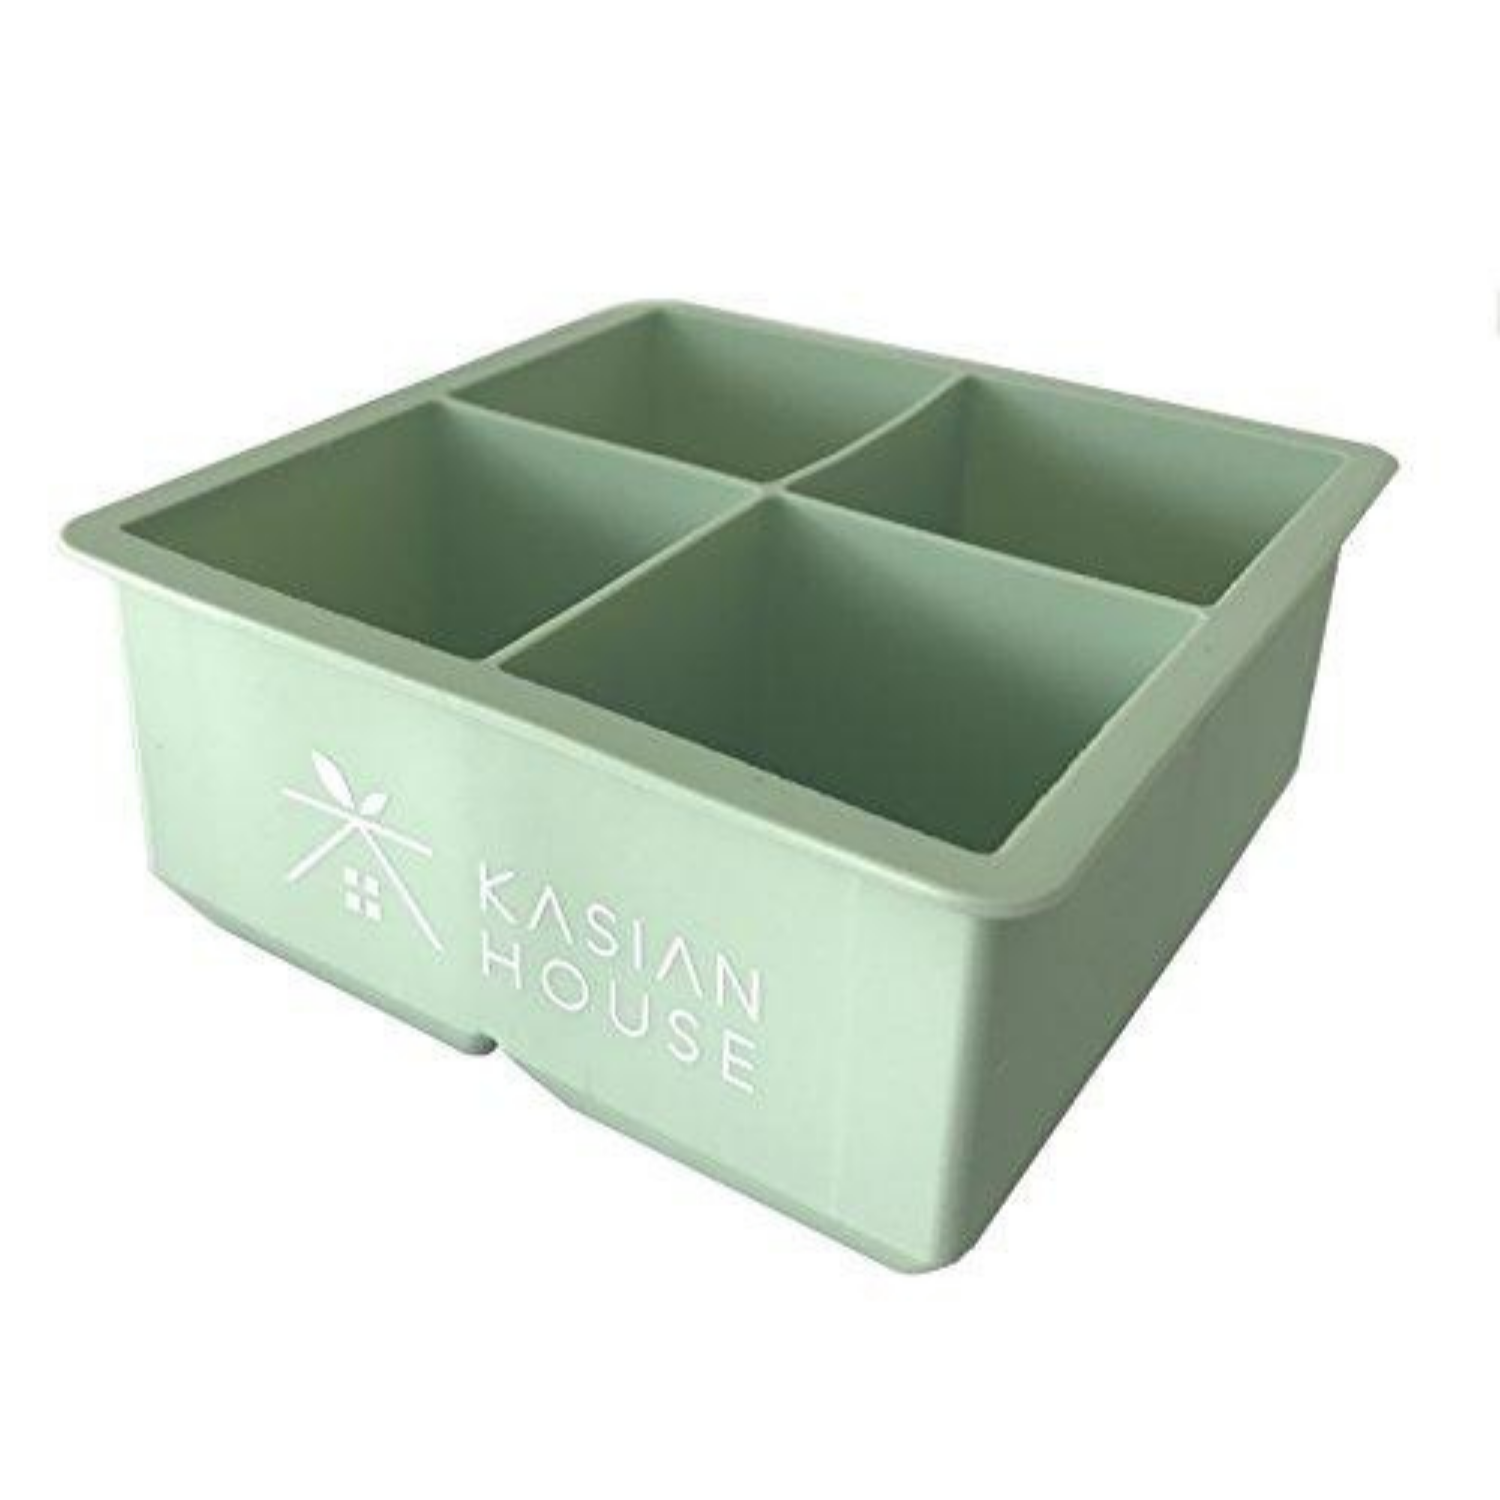 Kasian House - Extra Large Silicone Ice Cube Tray - 2.5 Cube (1 Tray)